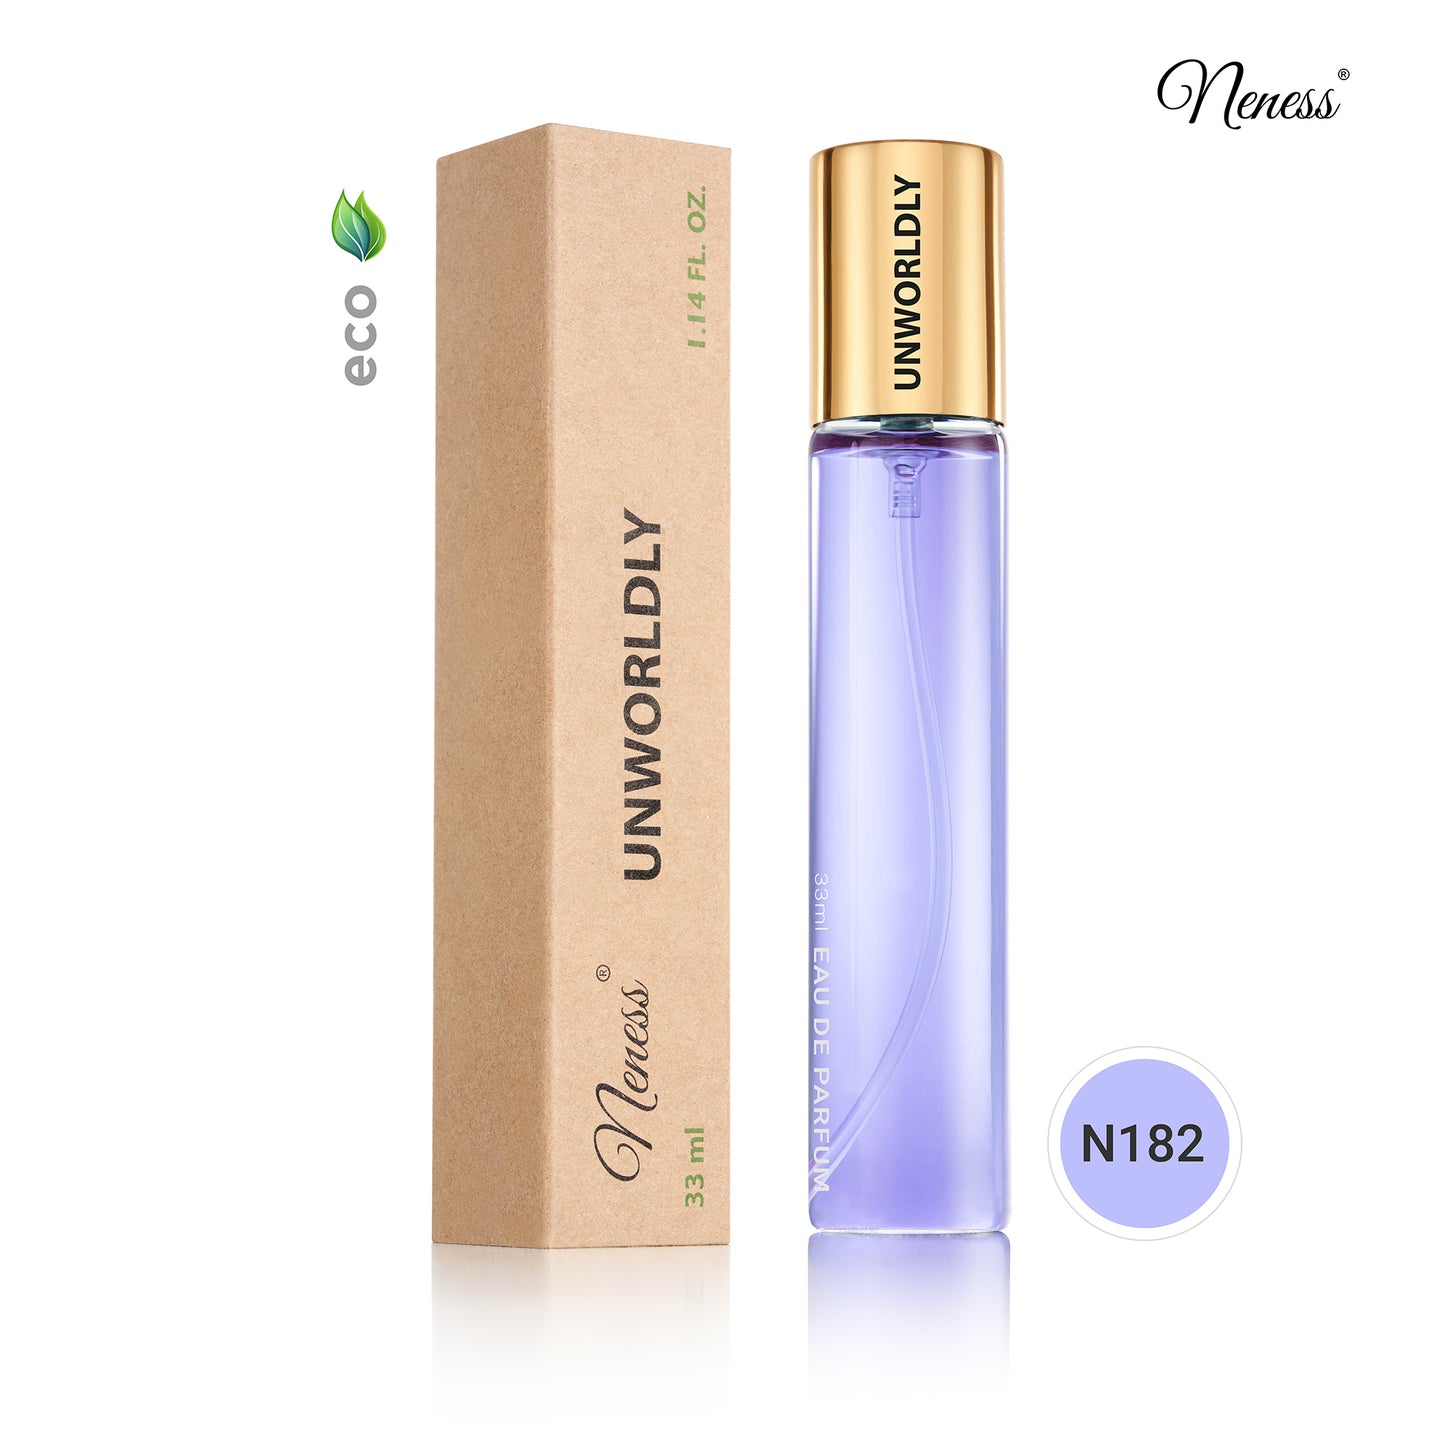 N182. Neness Unworldly - 33 ml - Perfume For Women